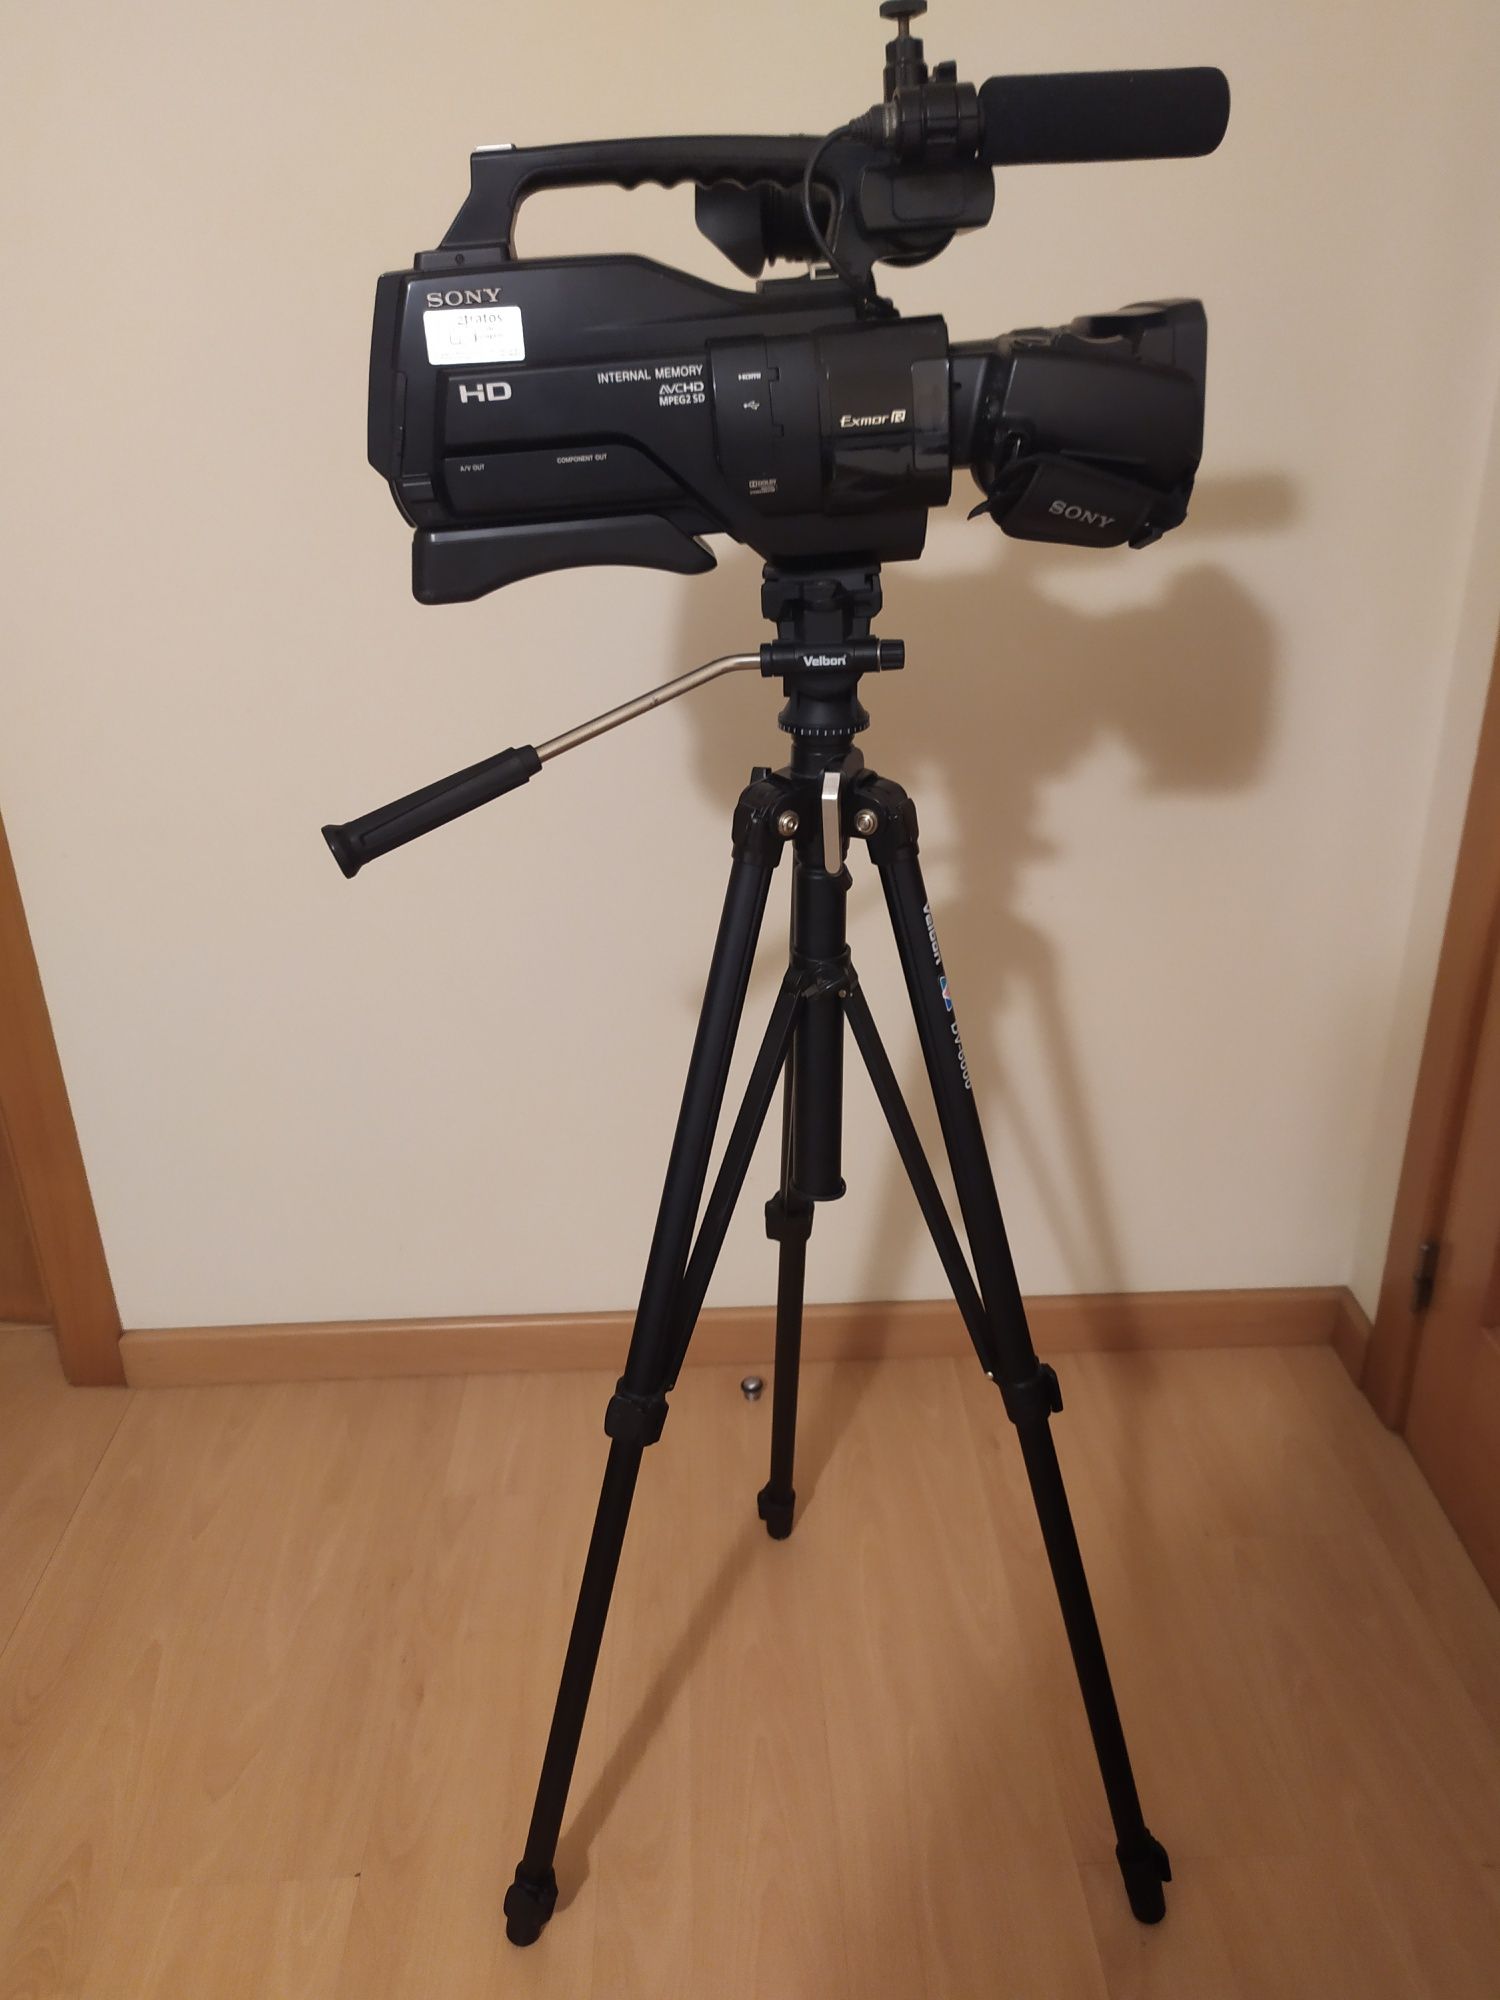 Máquina de filmar Sony HXR-MC2000